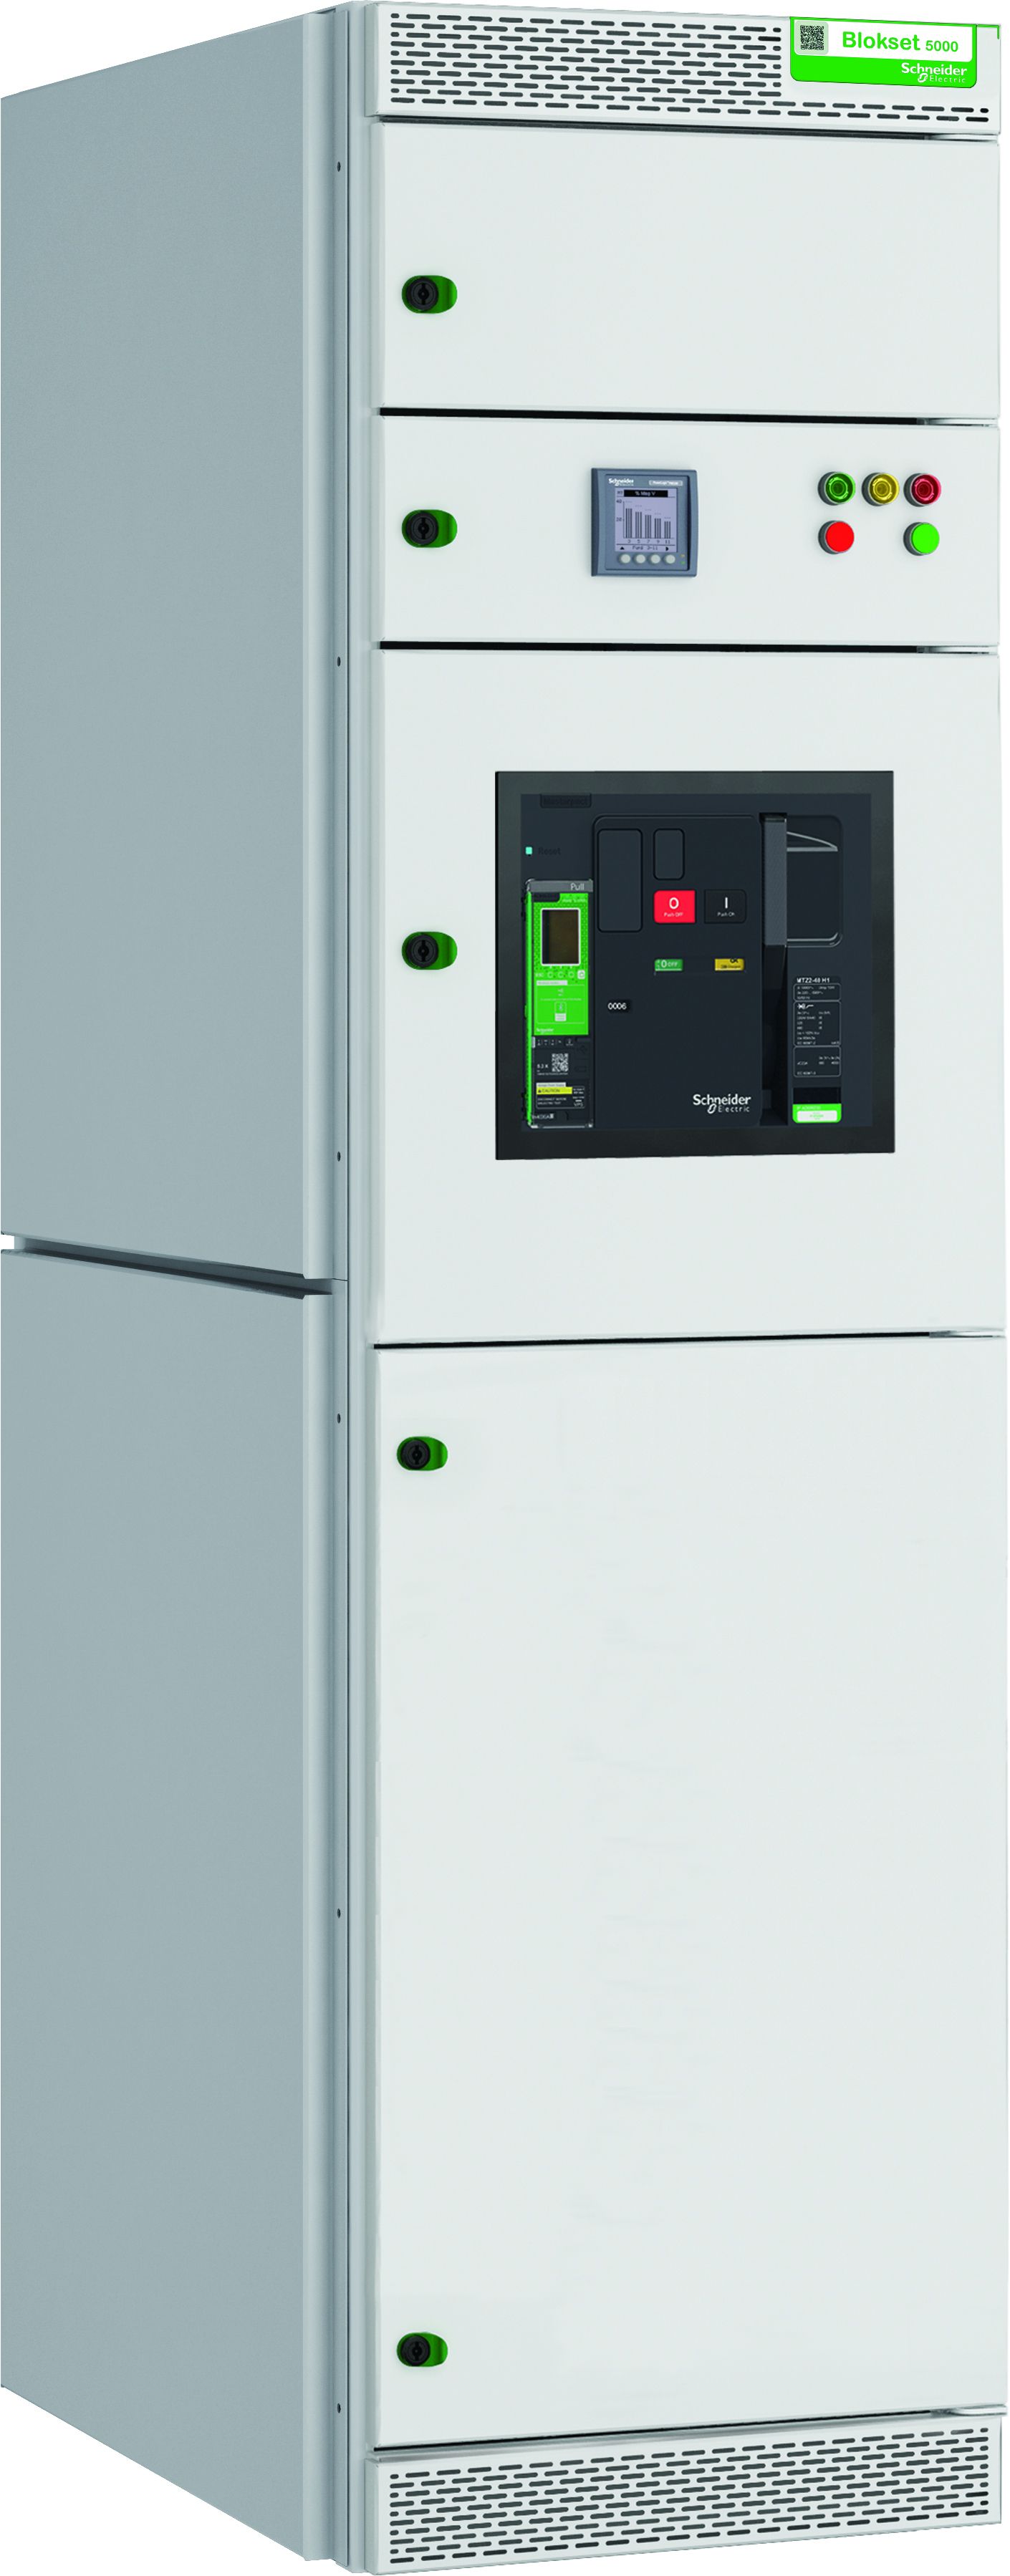 Schneider Blokset5000 licensed production cabinet